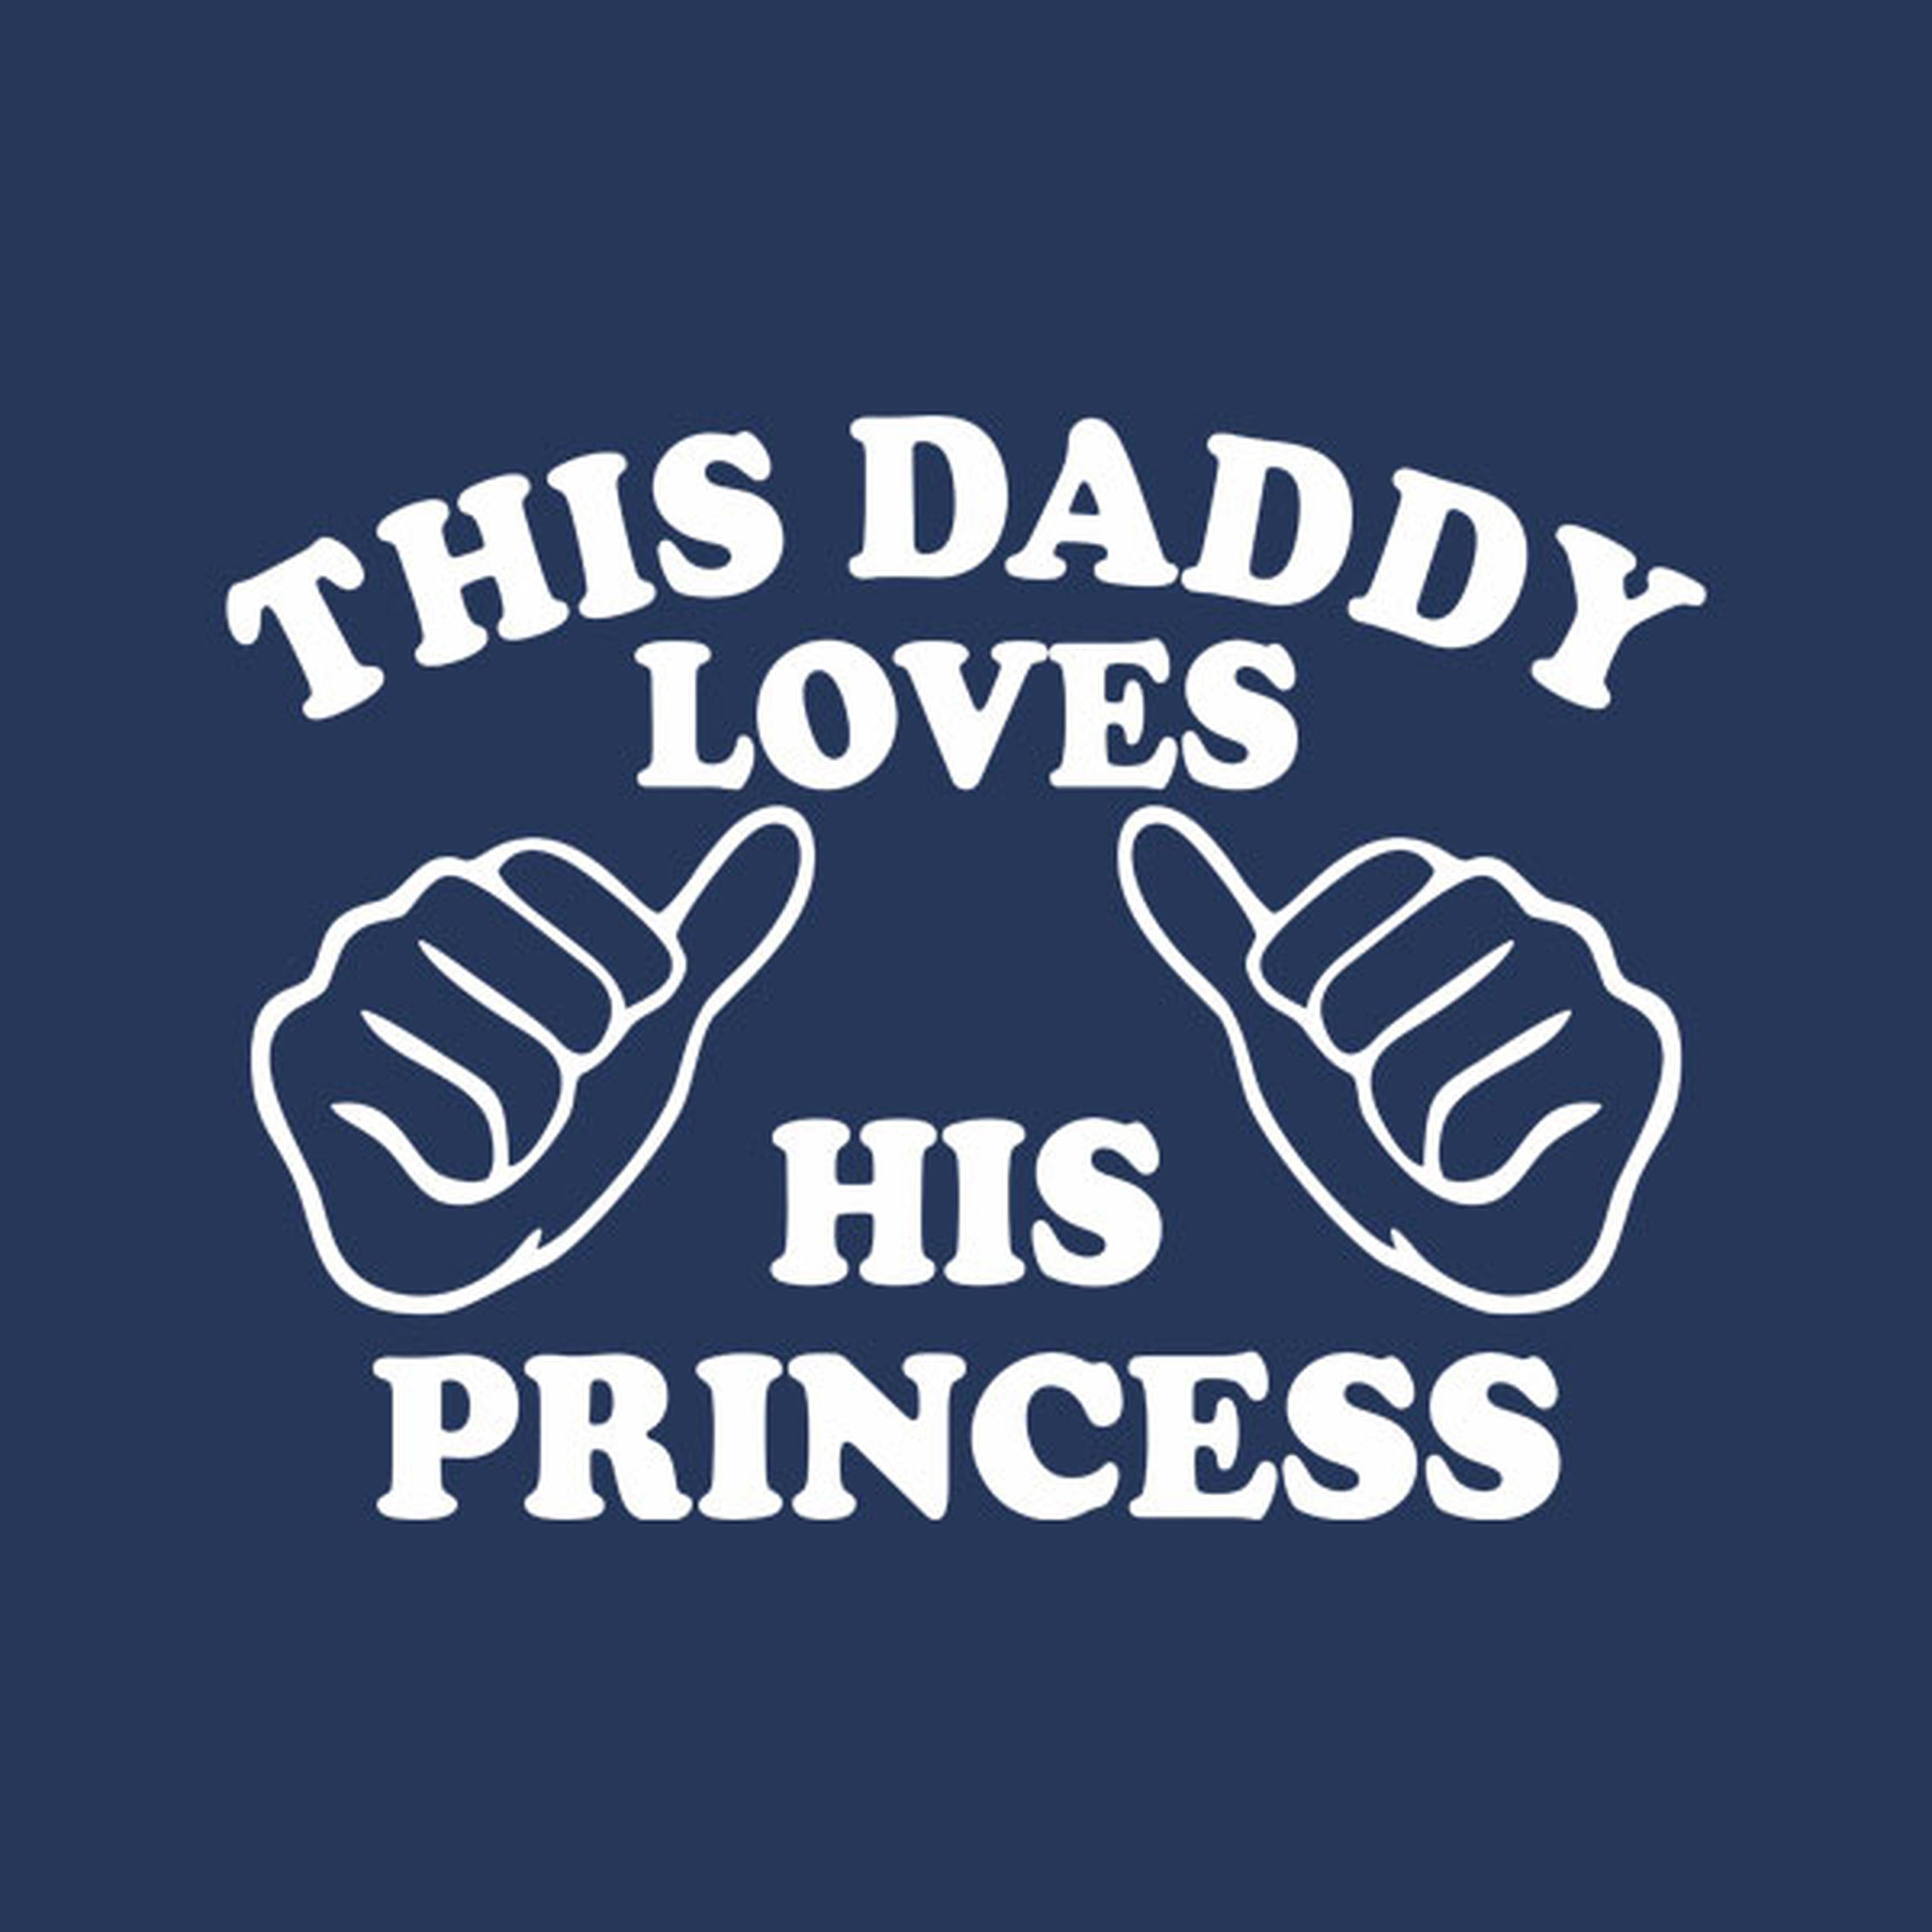 This daddy loves his princess - T-shirt